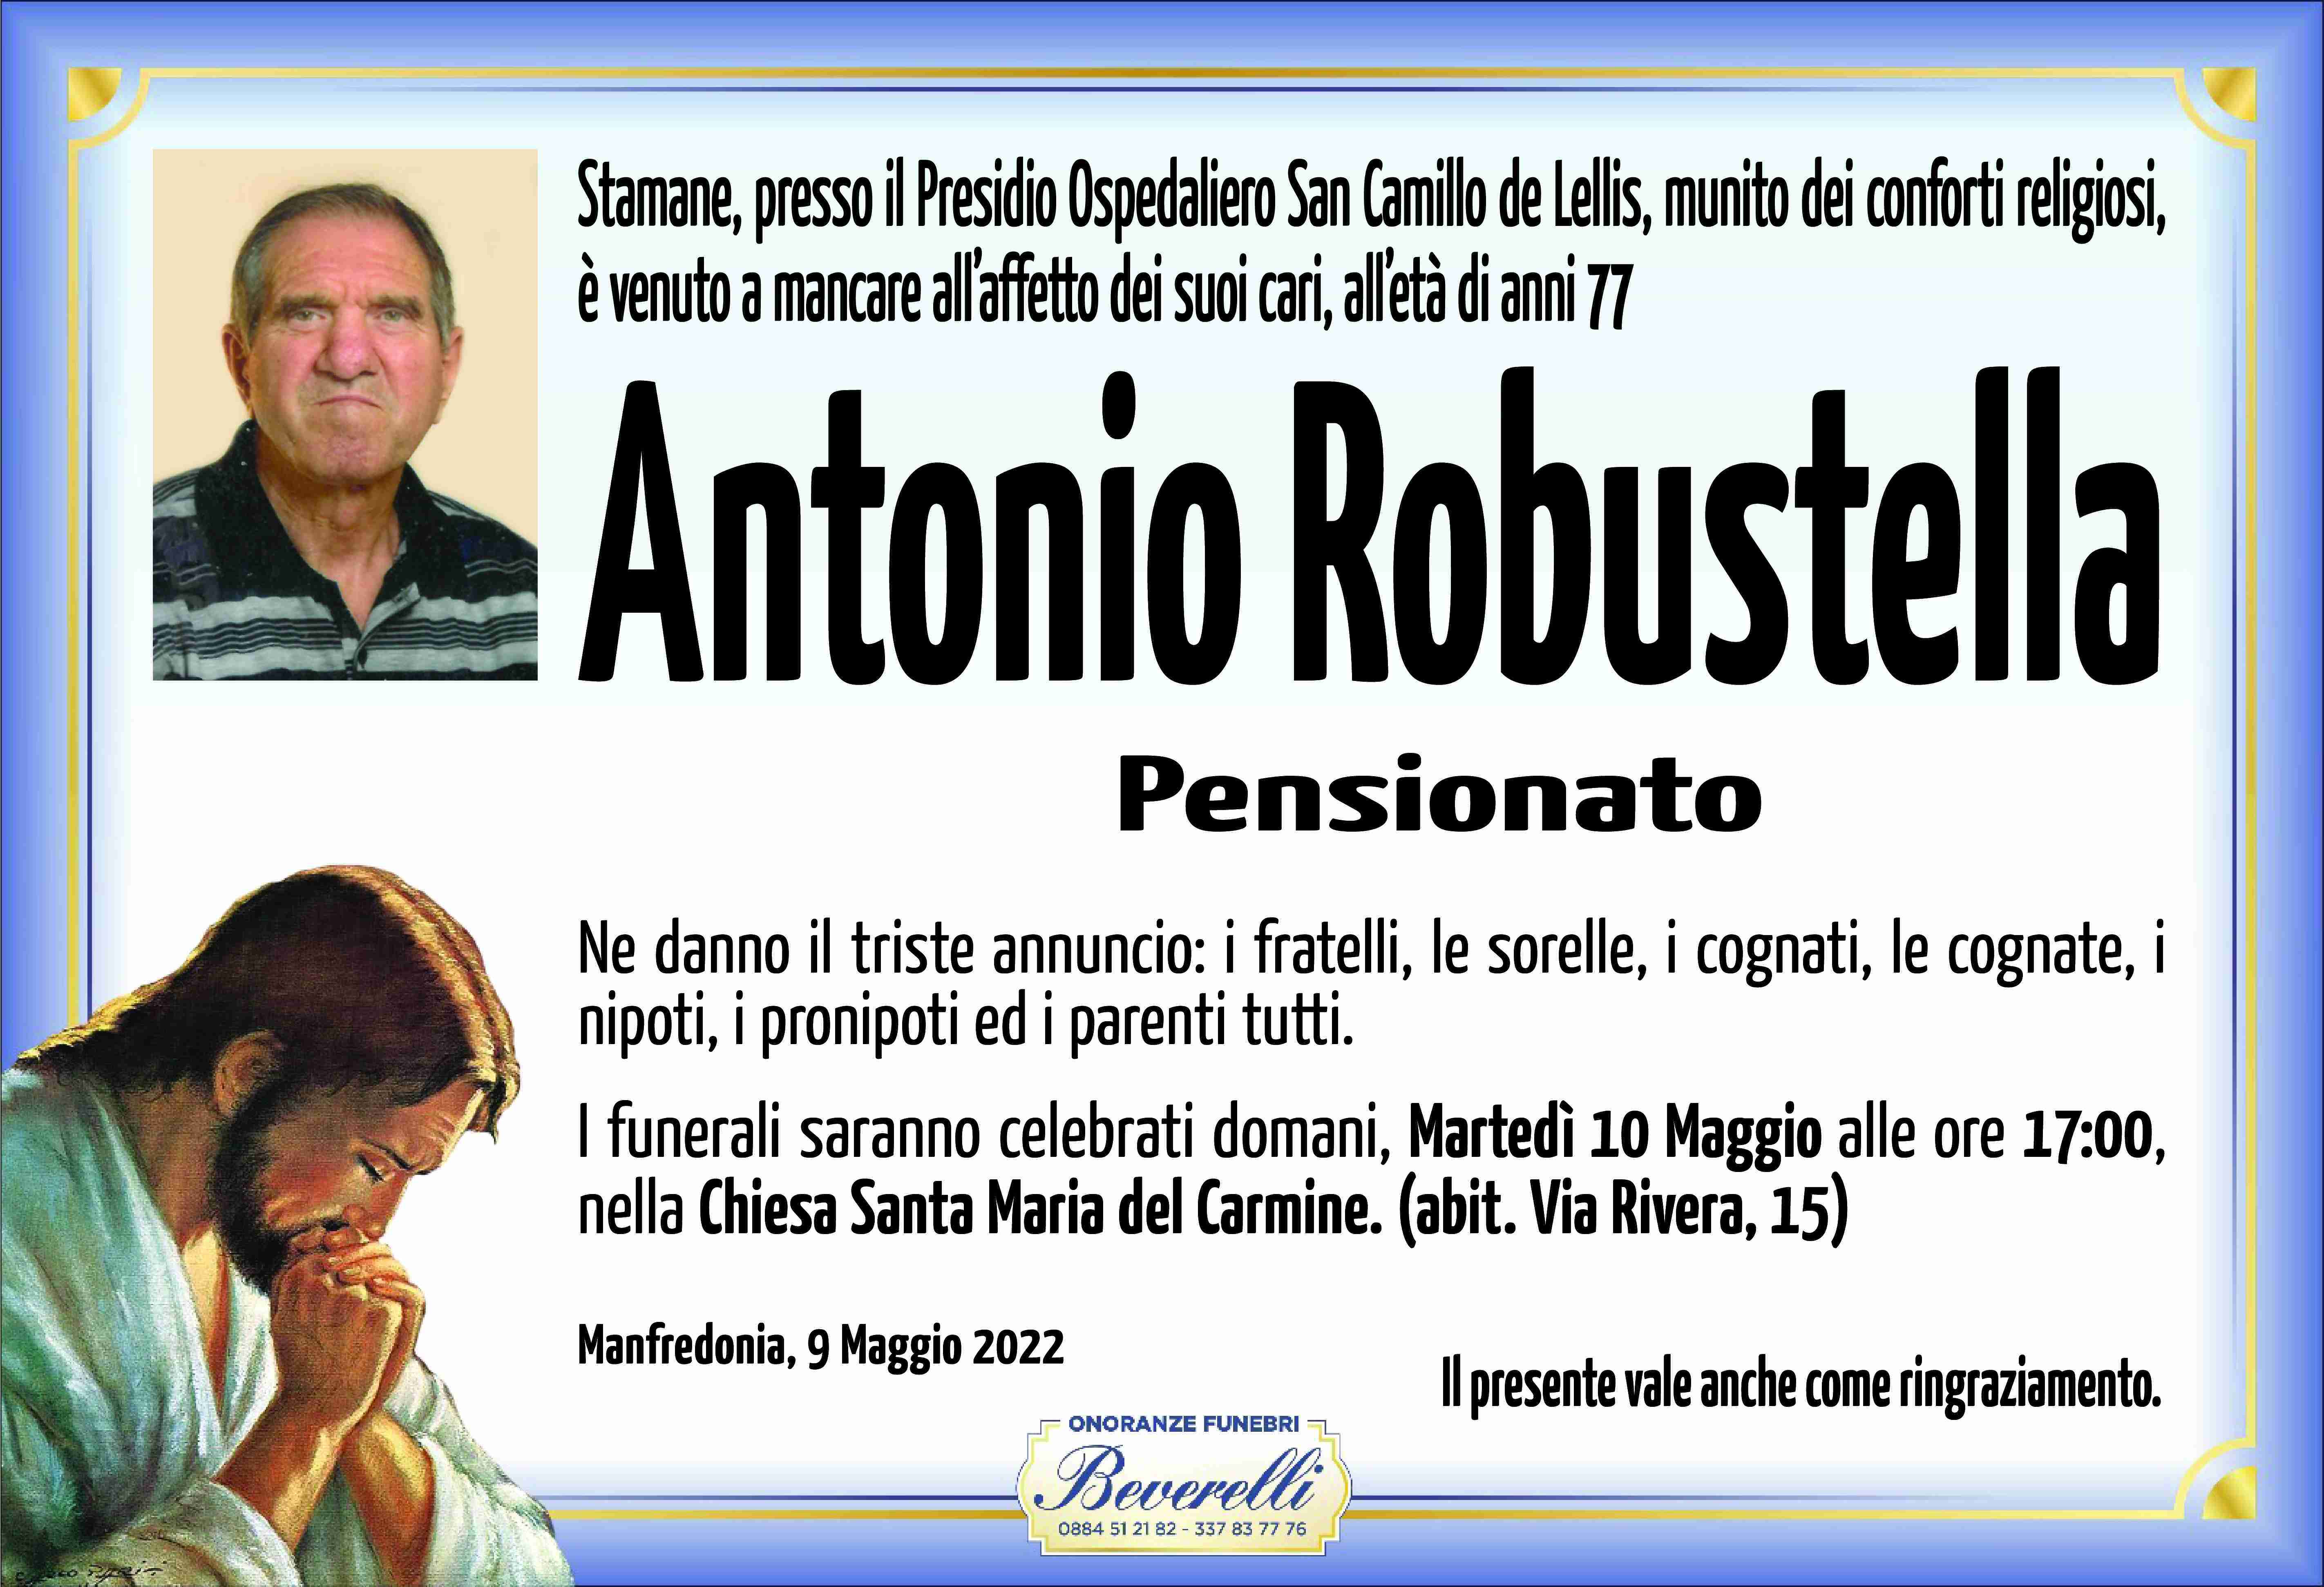 Antonio Robustella